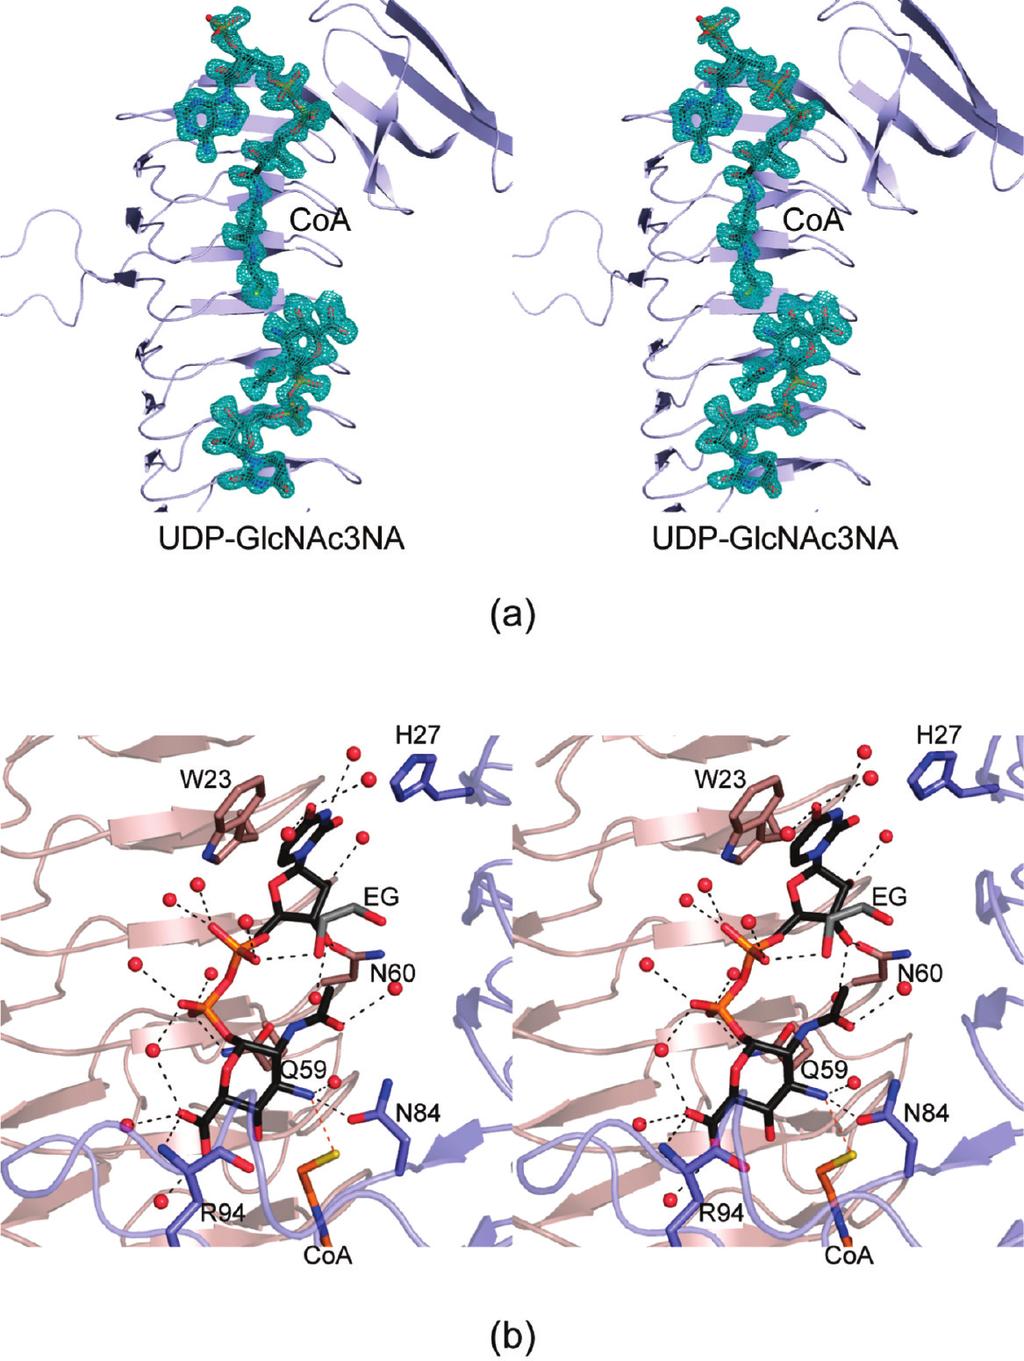 4650 Biochemistry, Vol. 49, No. 22, 2010 Thoden and Holden FIGURE 4: Active site architecture of the WlbB-CoA-UDP-GlcNAc3NA complex model.